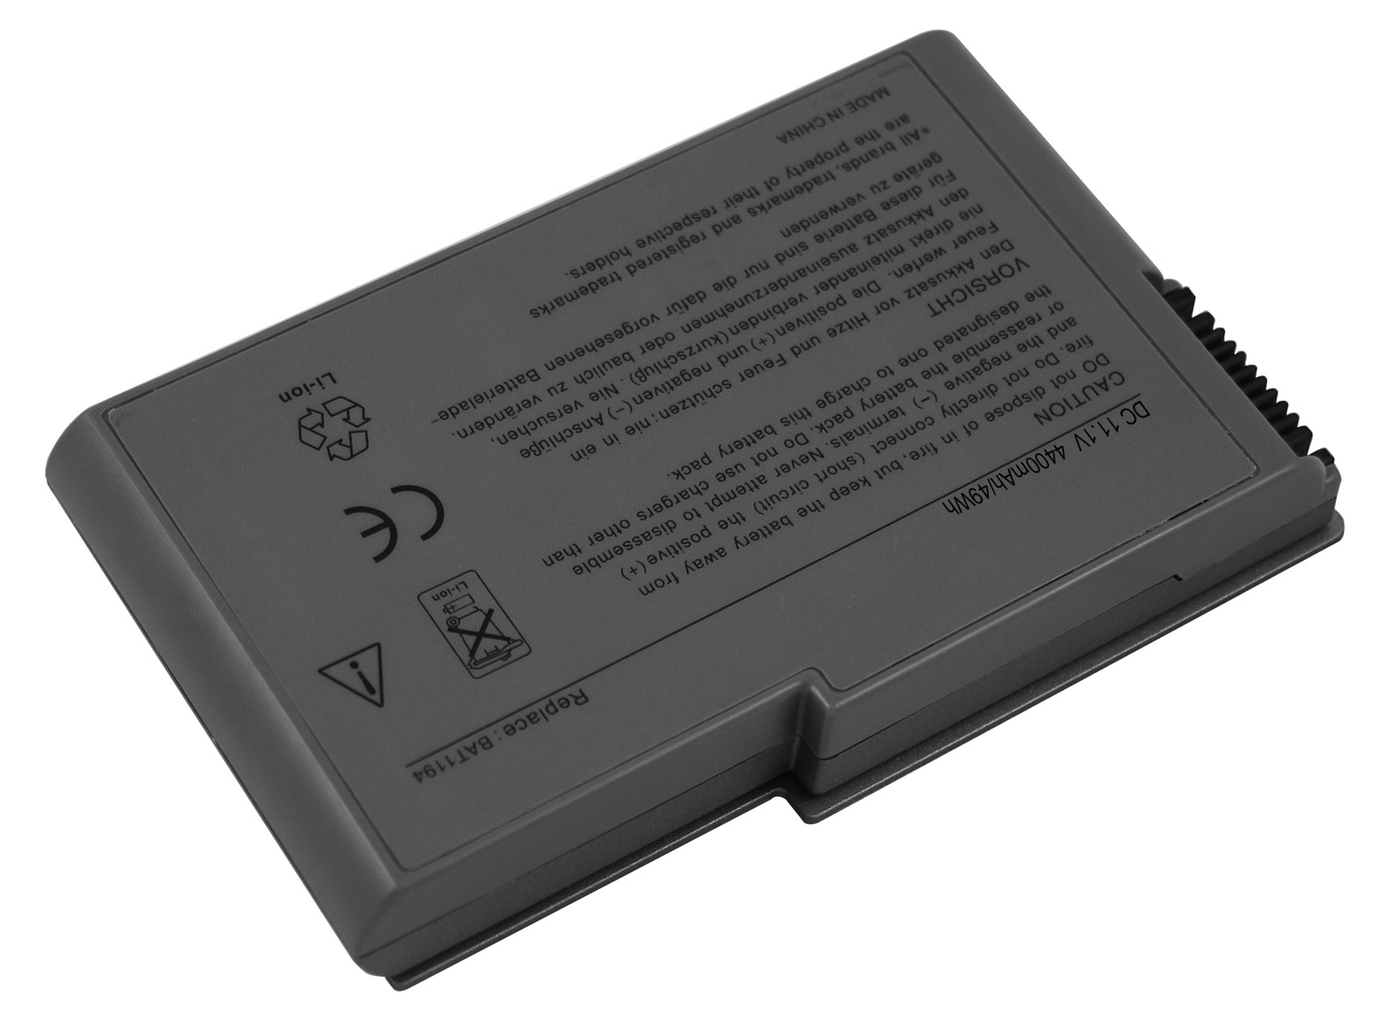 Аккумулятор Для Ноутбука Dell Inspiron N7110 Купить